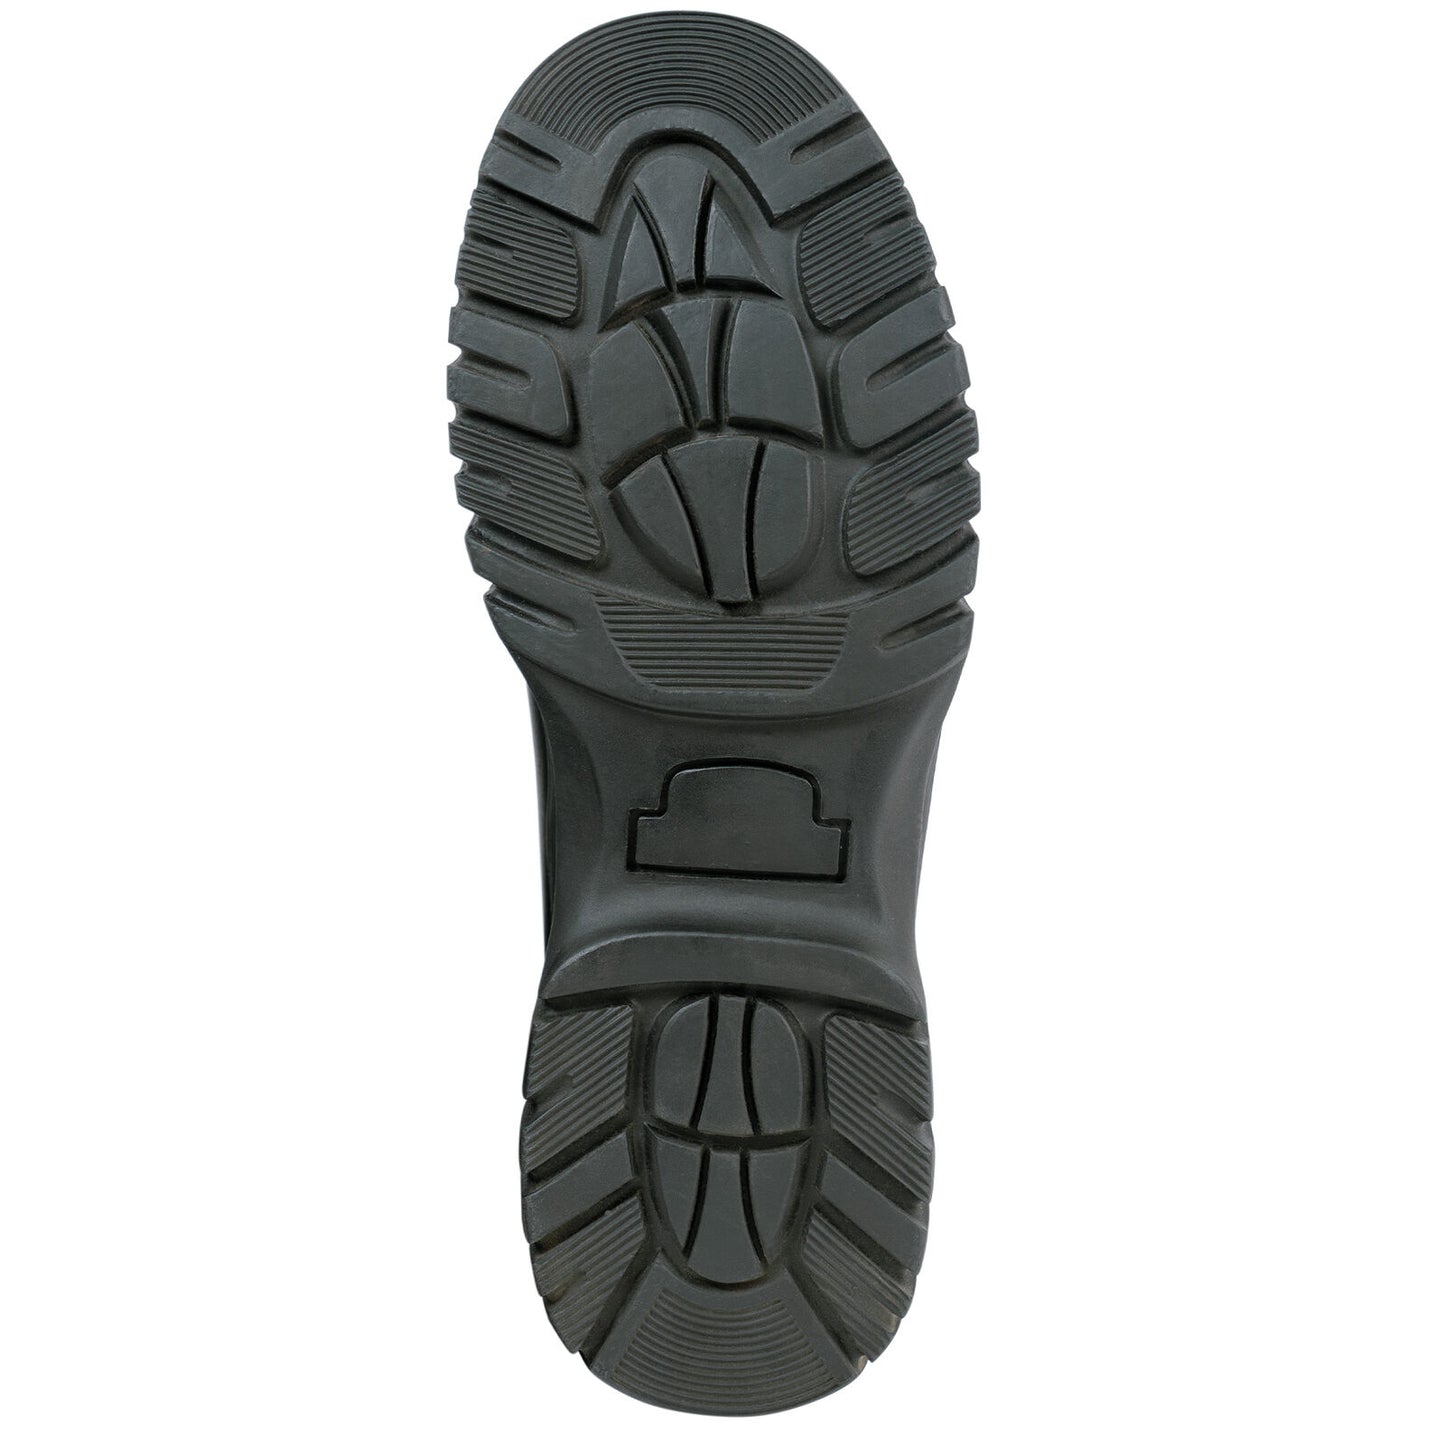 Men's Black Chelsea Work Boots - Slip-On Boot With Oil & Slip Resistant Sole